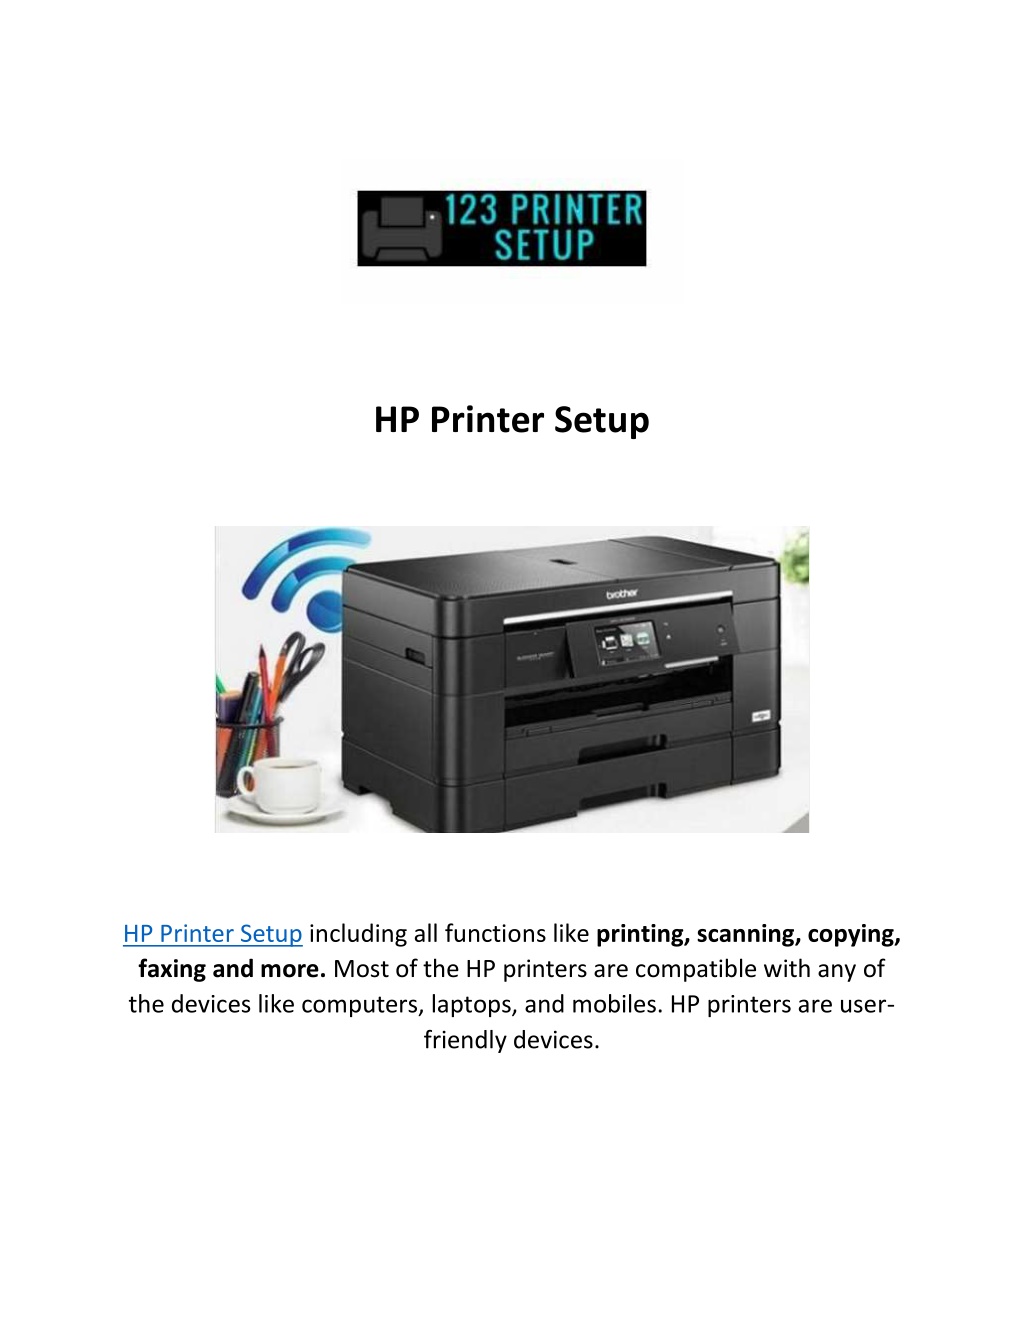 Ppt Hp Printer Setup Powerpoint Presentation Free Download Id11167019 5819